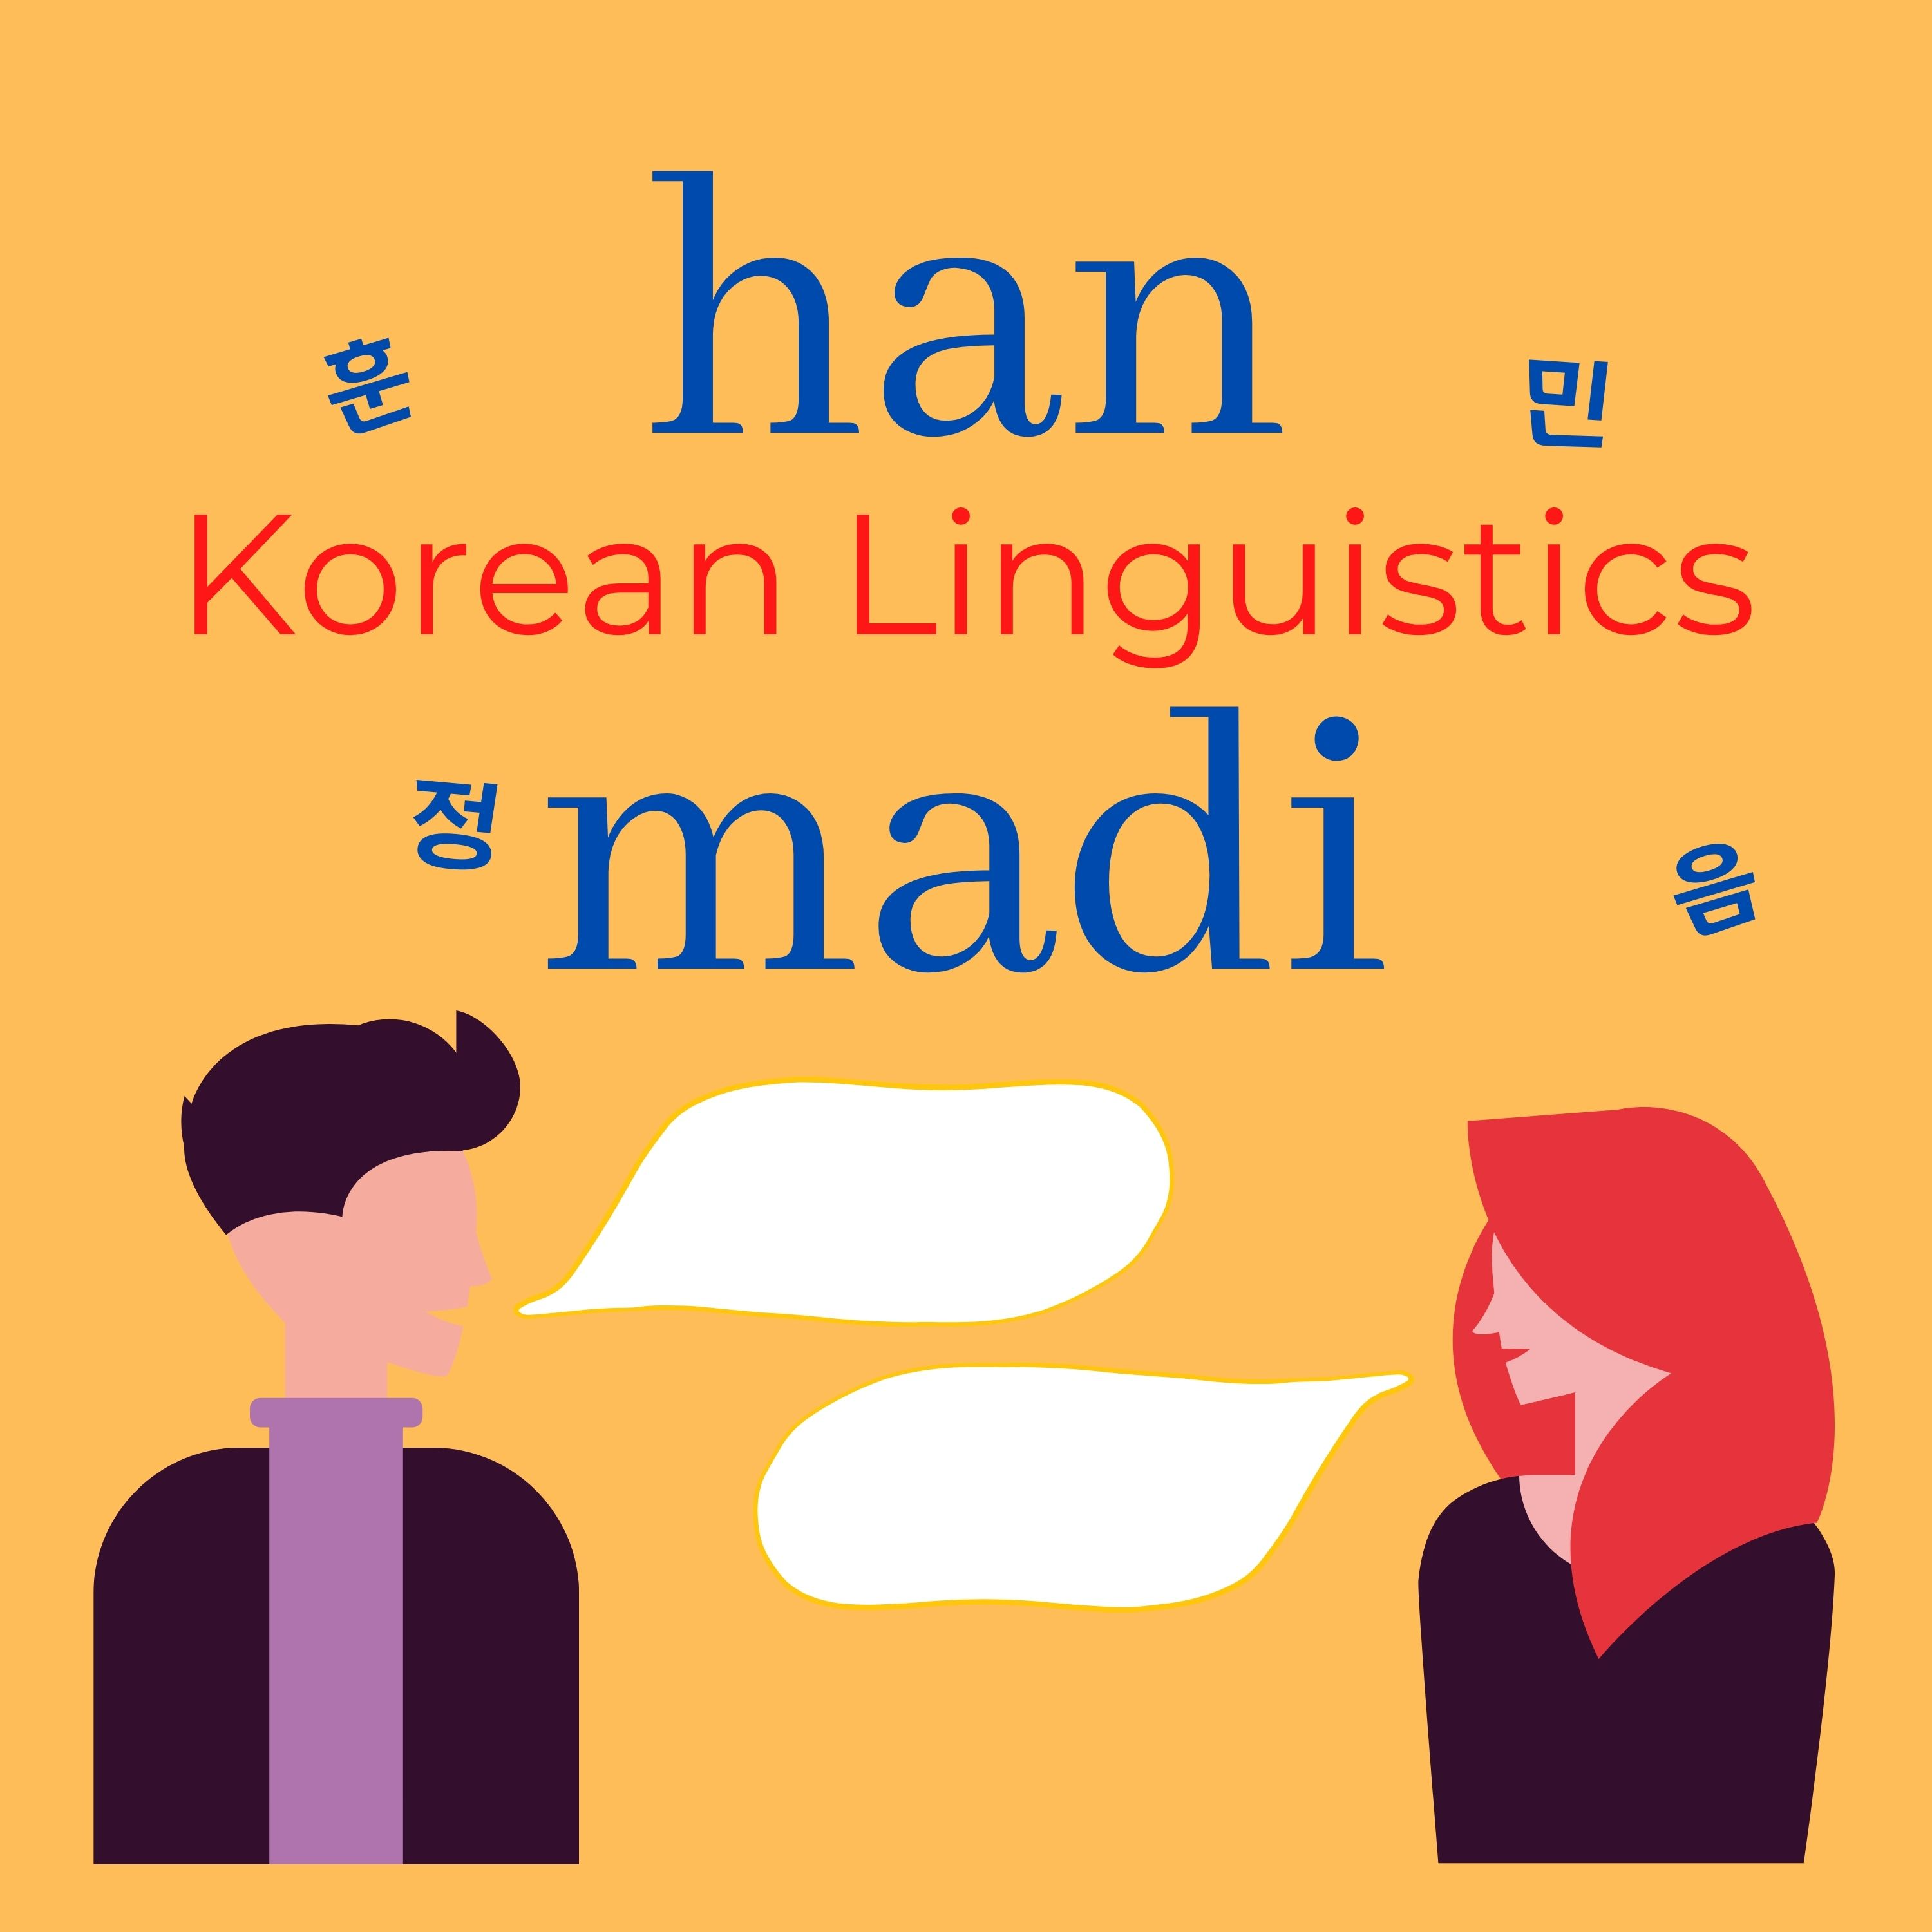 Hanmadi Korean Linguistics